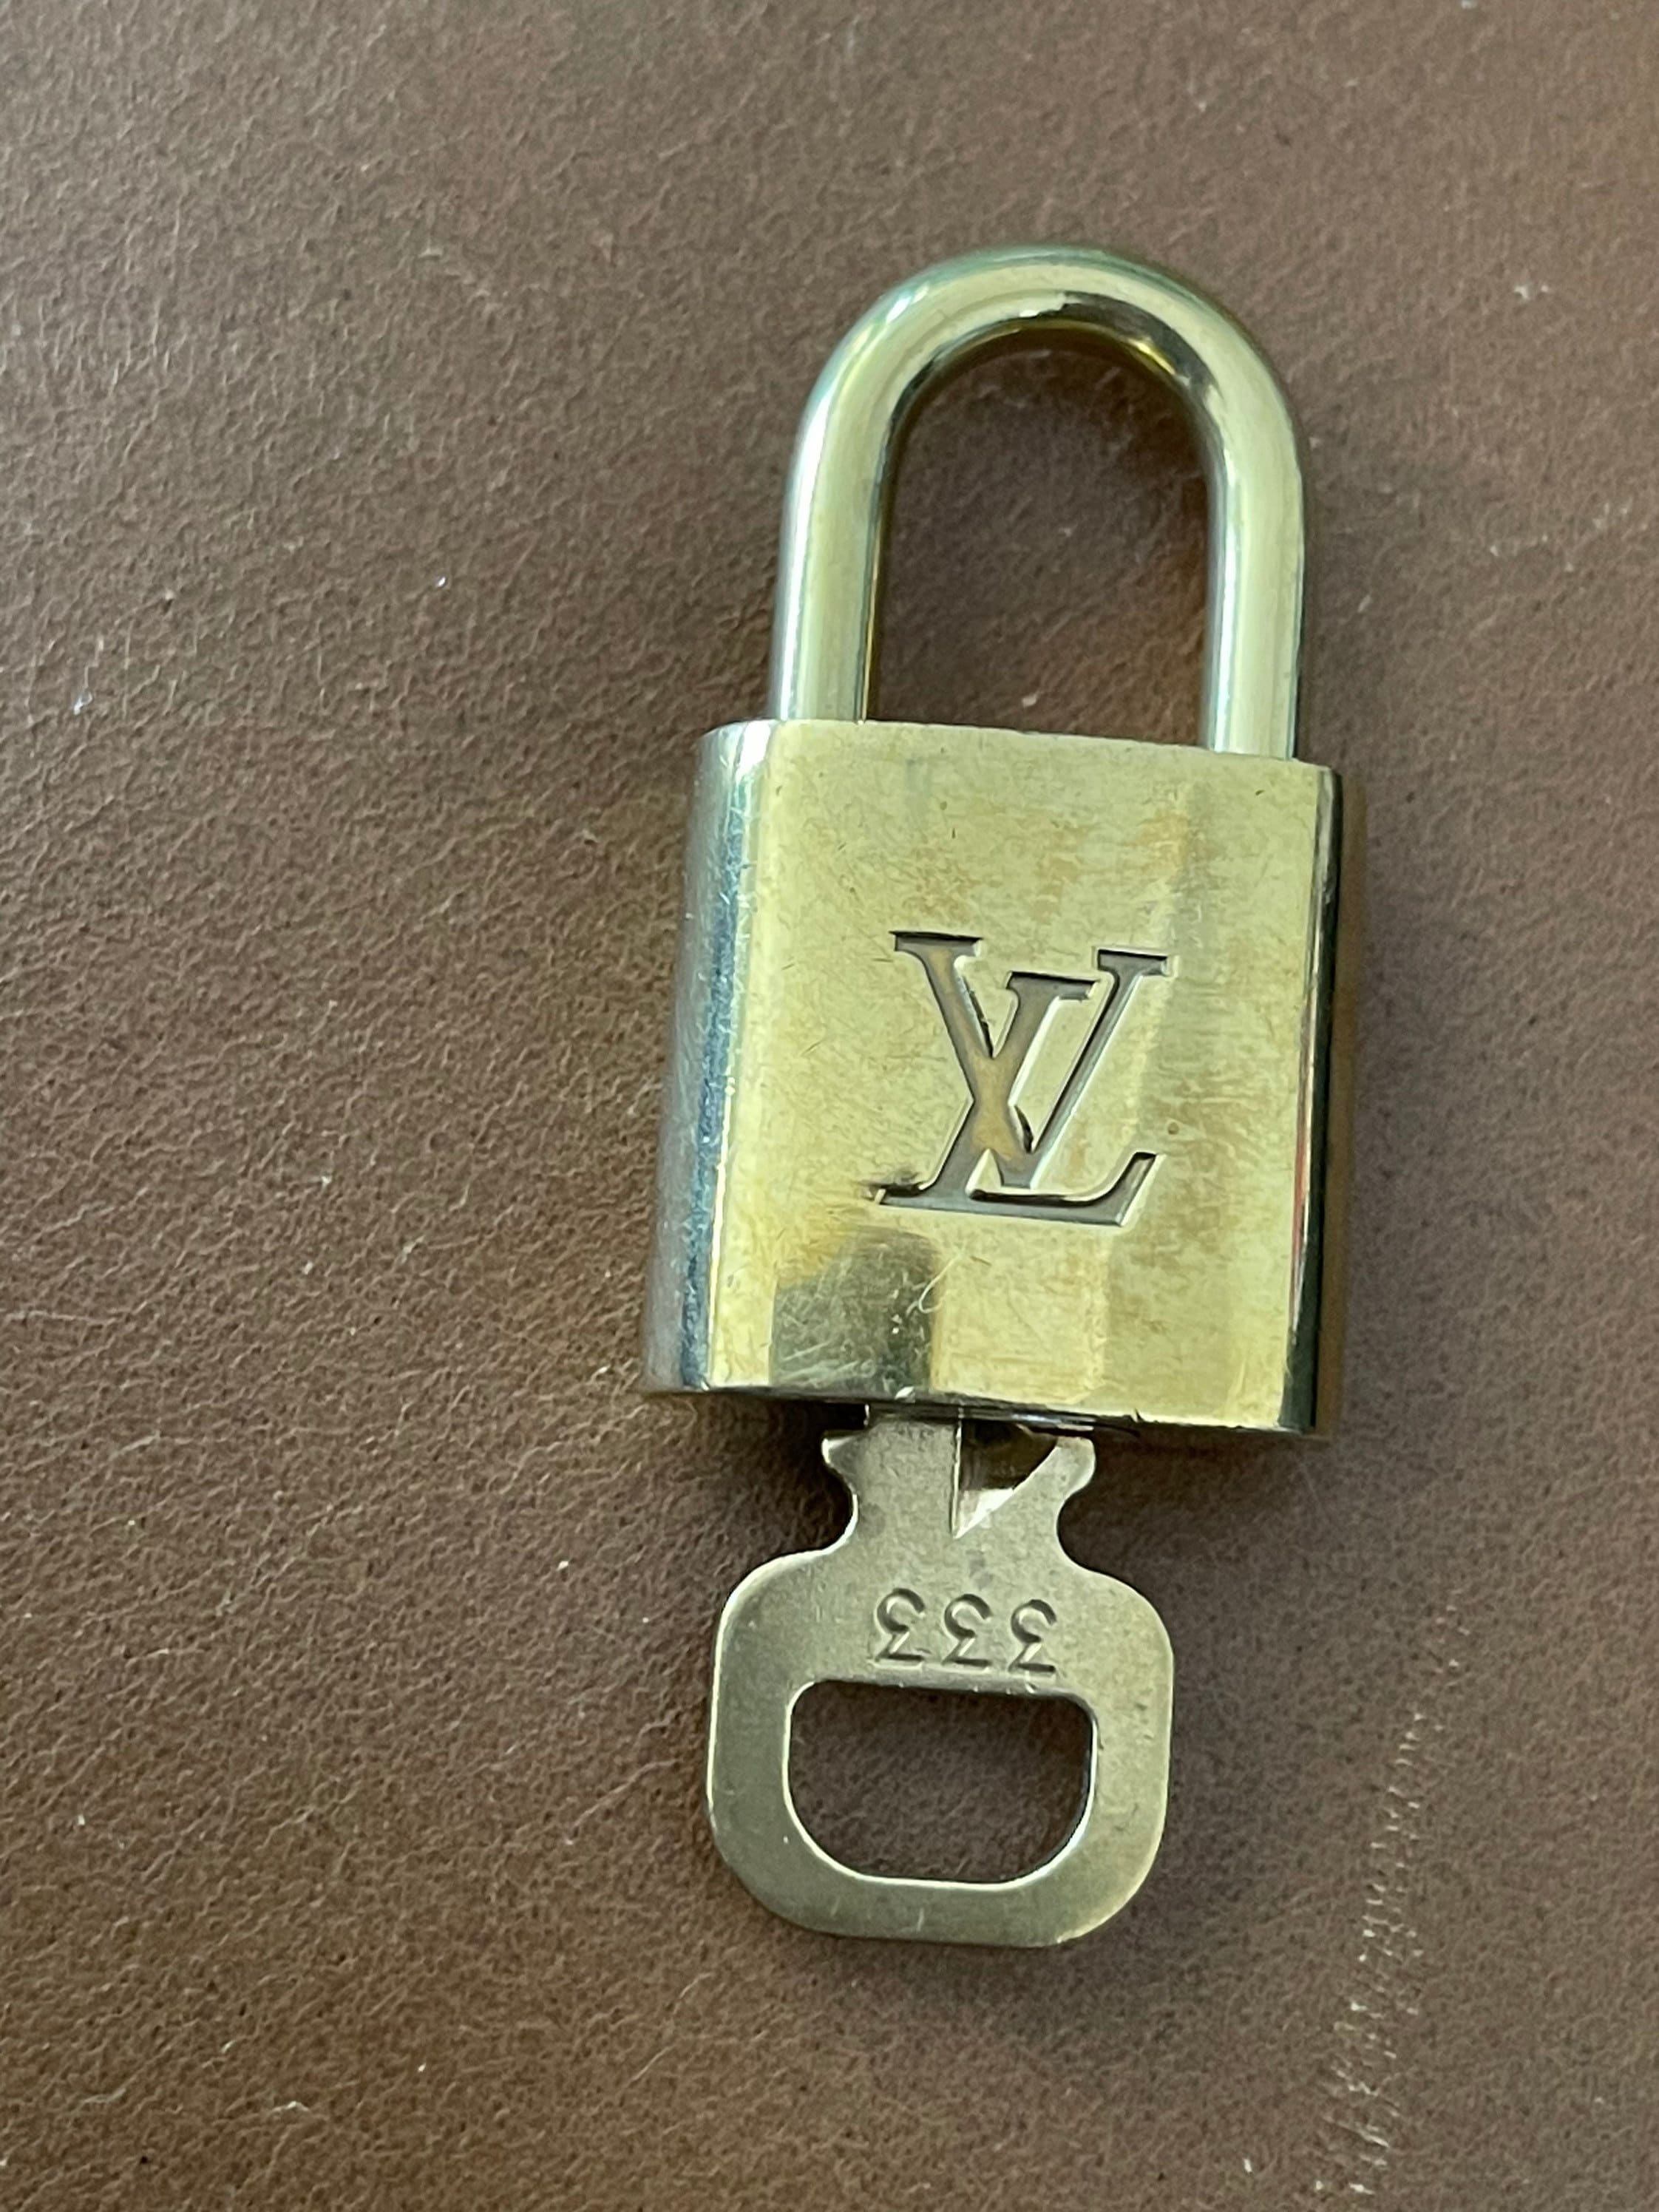 Louis Vuitton PadLock Lock & Key for Bags Brass Gold (Number random)